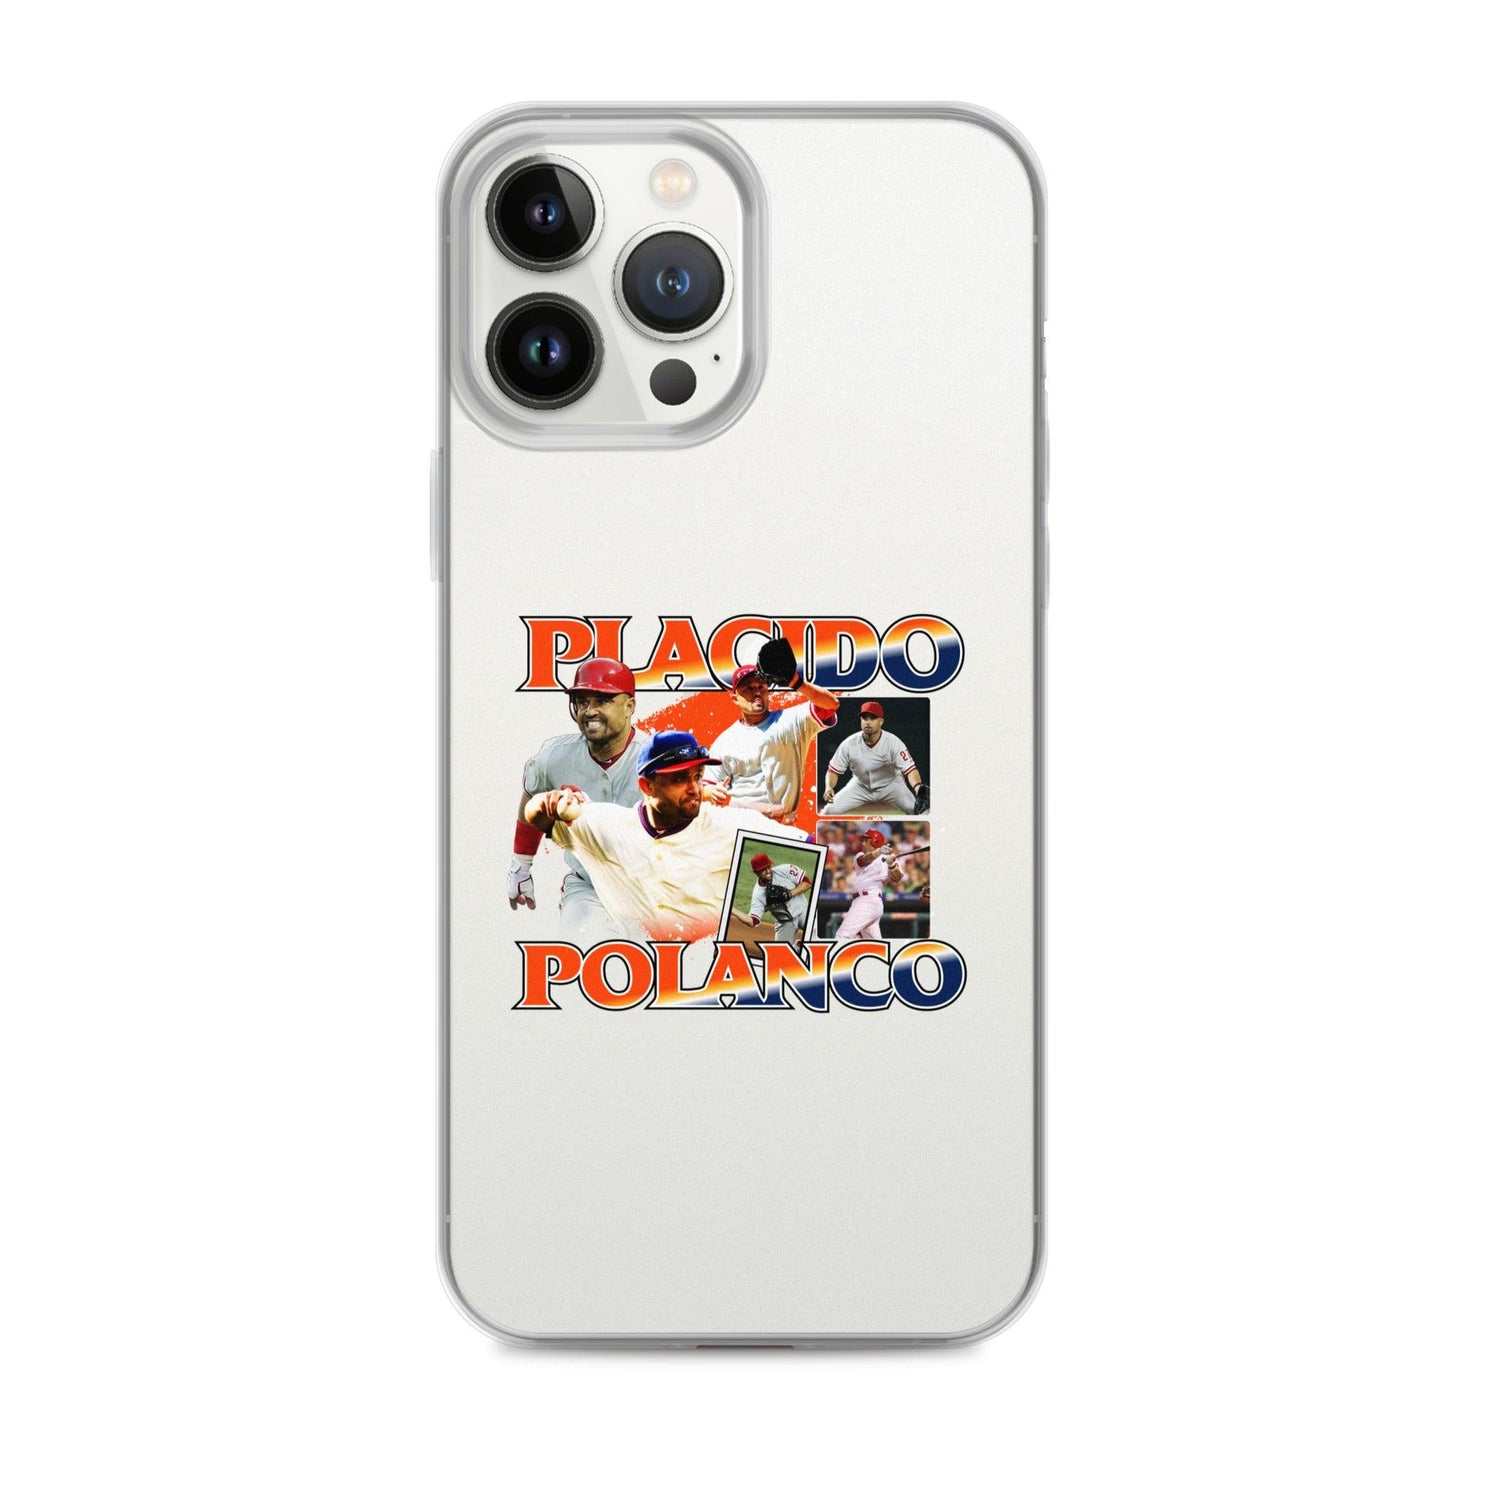 Placido Polanco "Vintage" iPhone® - Fan Arch